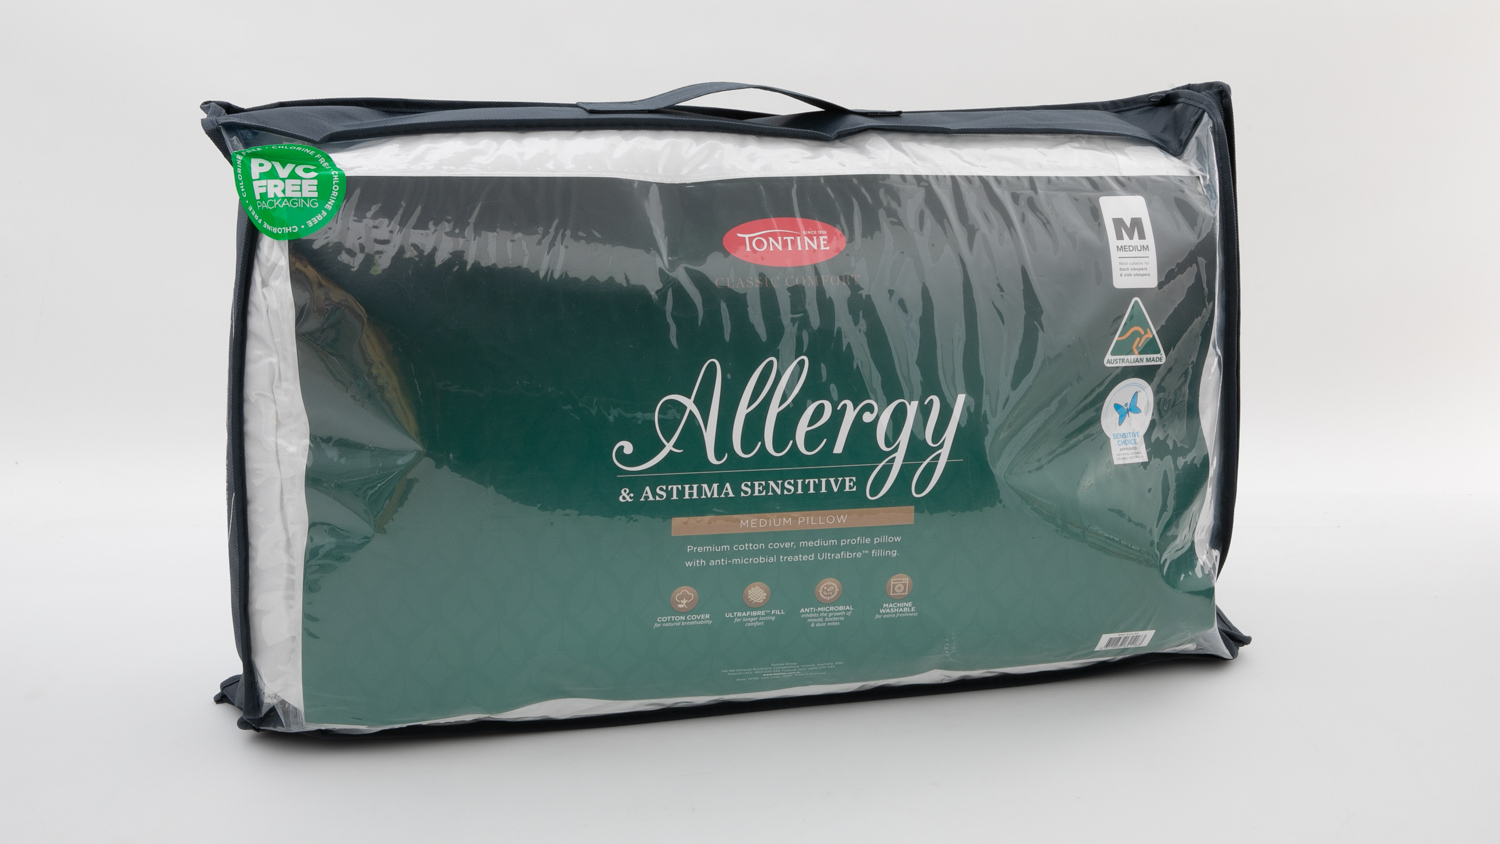 Tontine Classic Comfort Allergy & Asthma Sensitive Medium Pillow carousel image